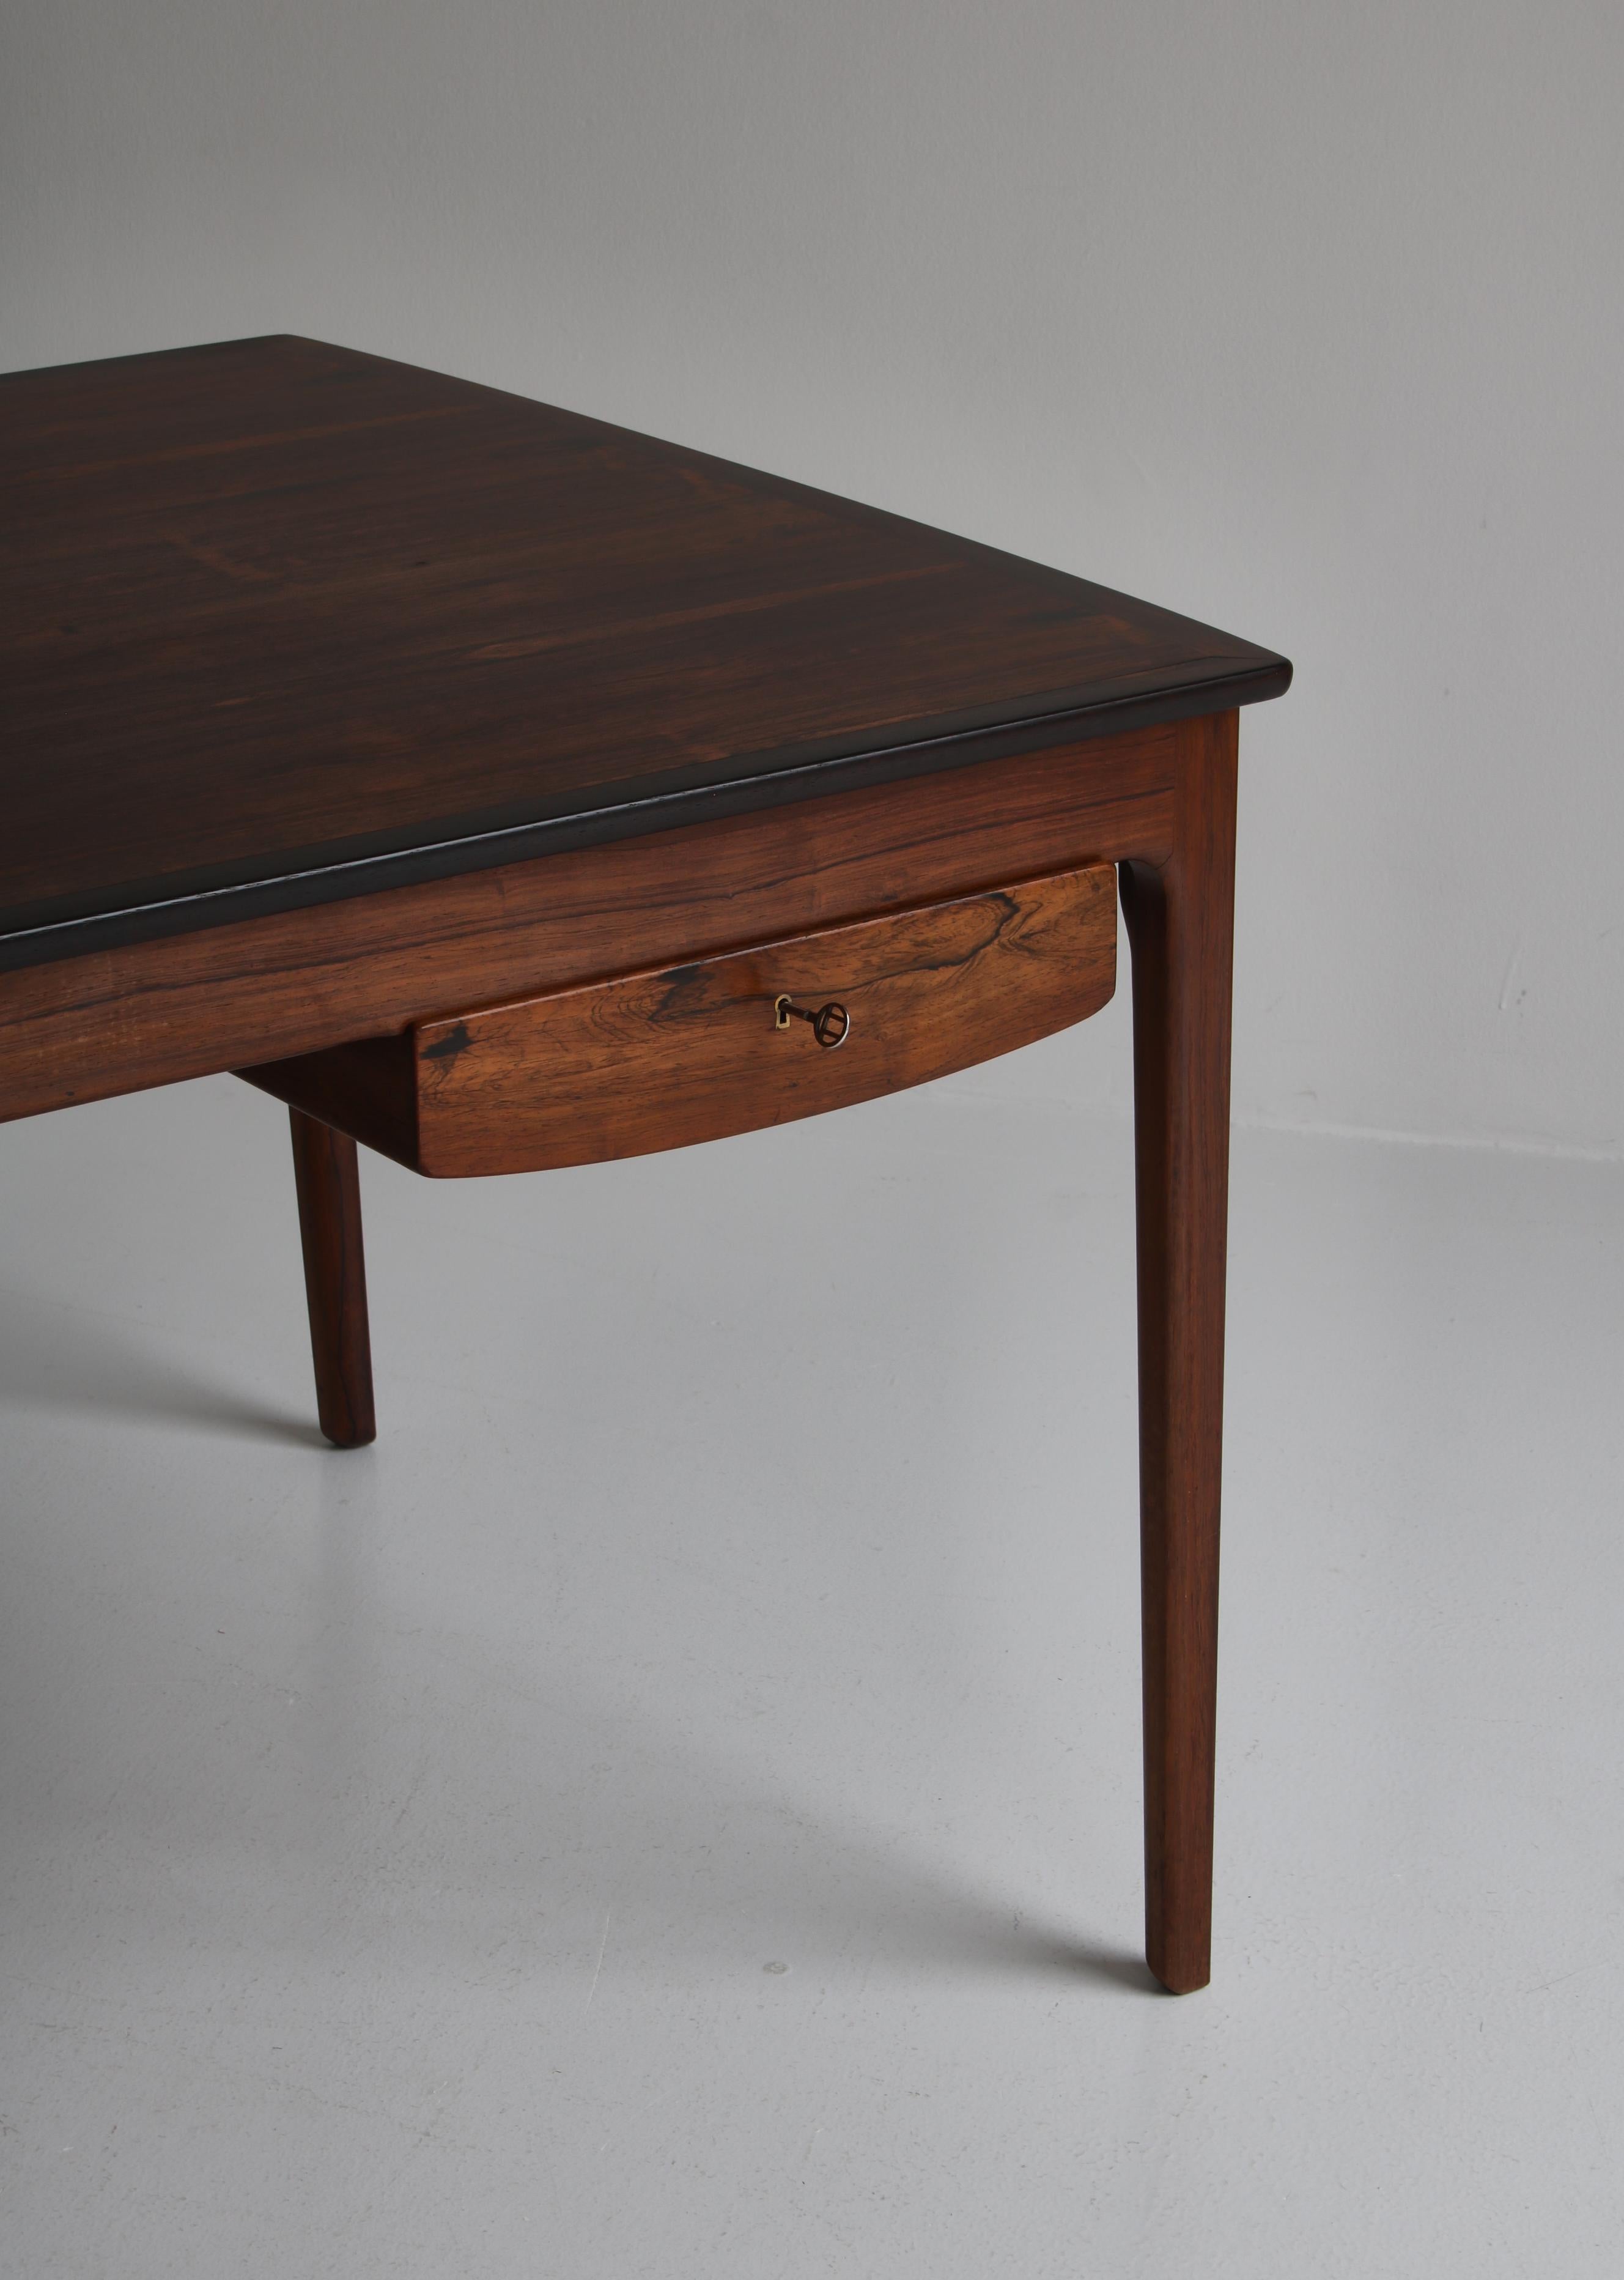 Ole Wanscher Freestanding Desk in Rosewood Made by A.J. Iversen, Copenhagen 1959 For Sale 1